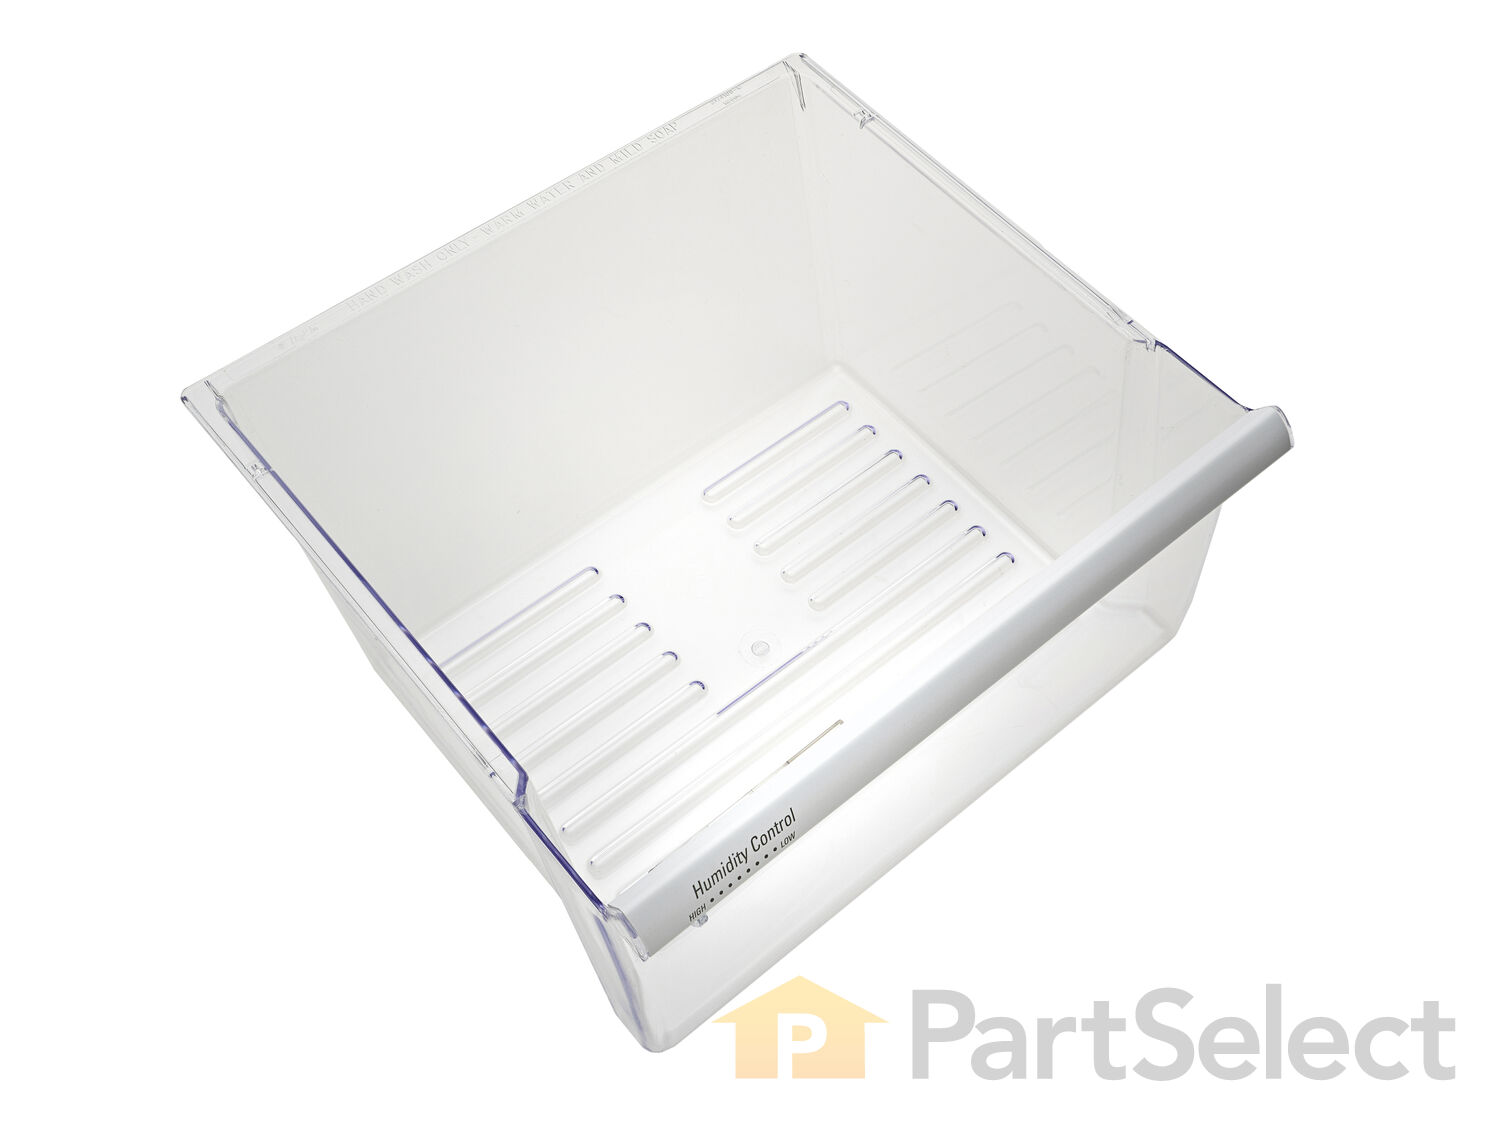 Refrigerator Crisper Drawer With Humidity Control Wp2188656